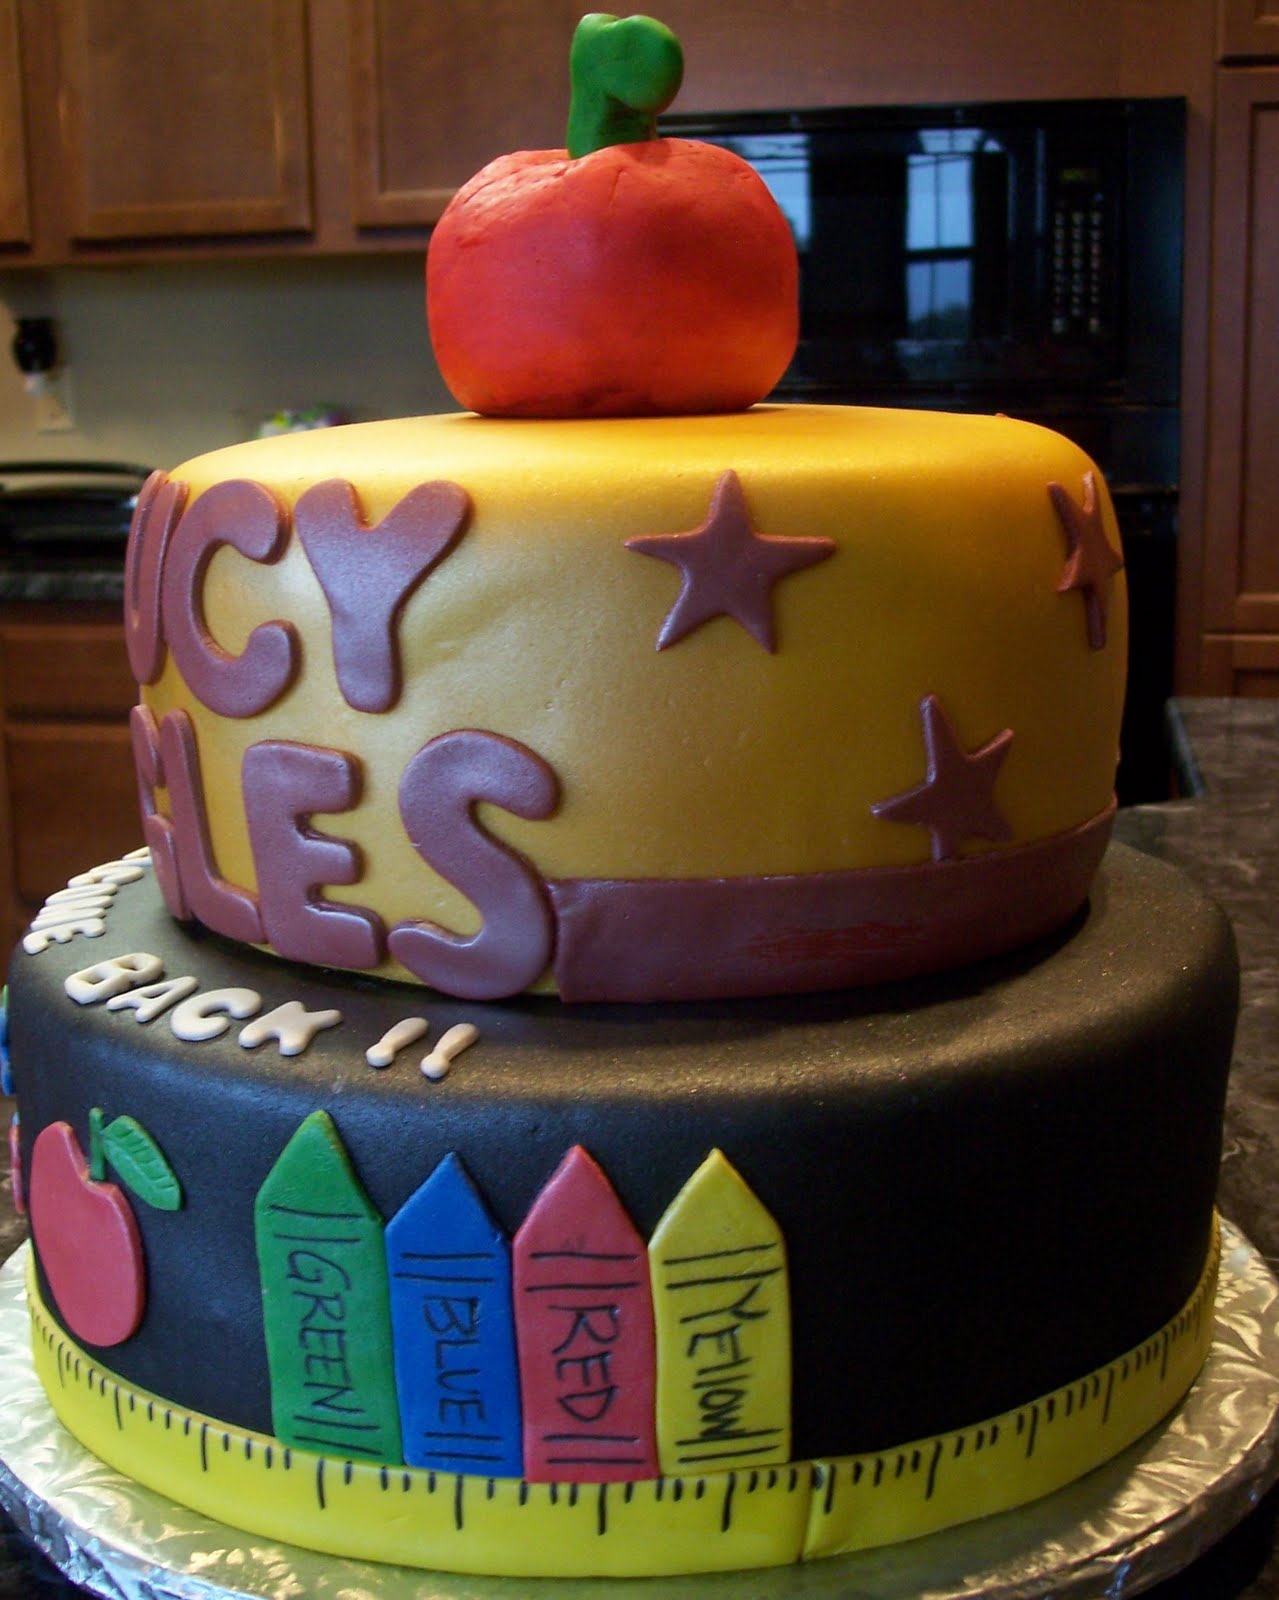 teachers cake